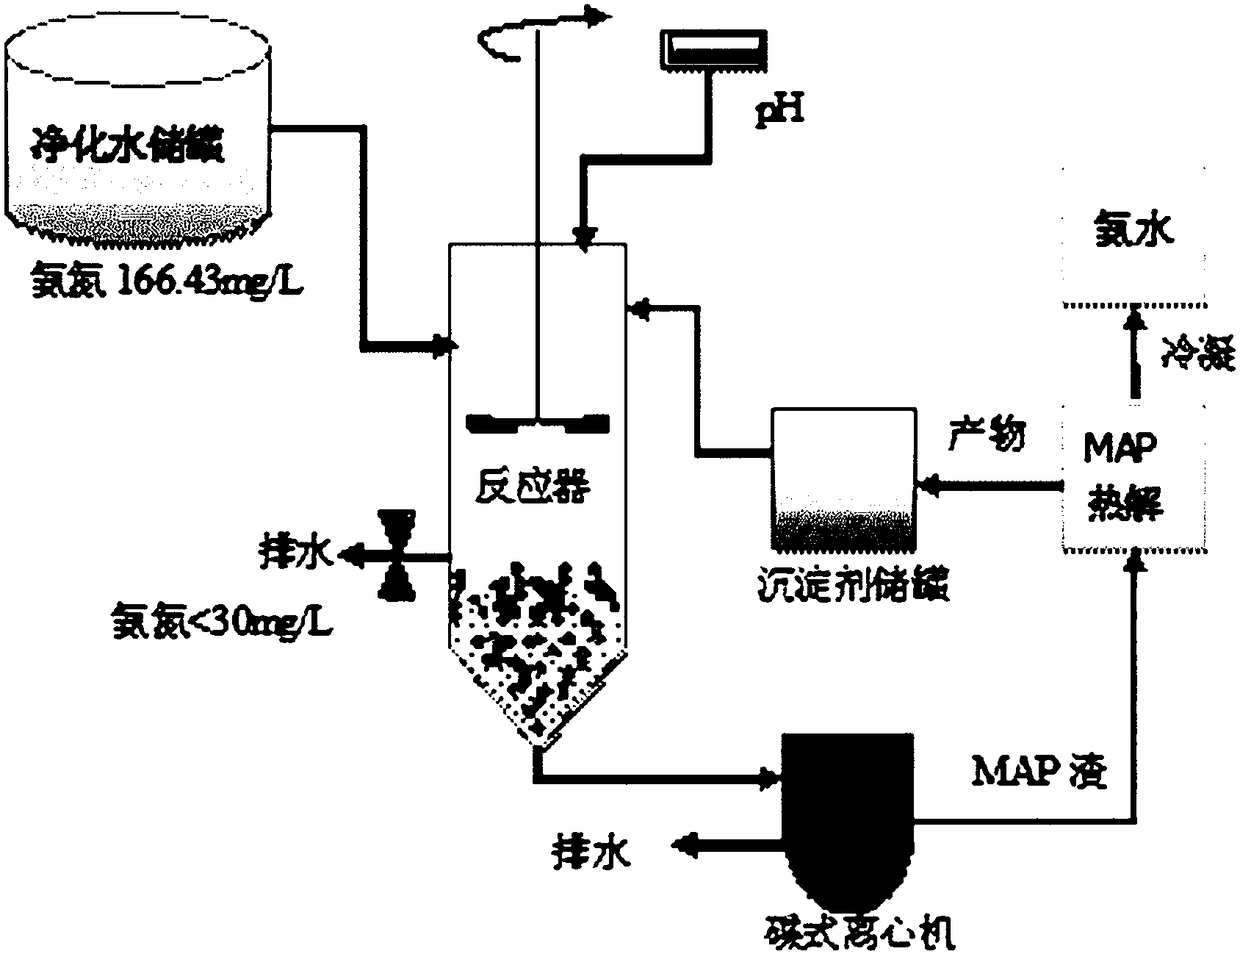 Method for cyclically using magnesium ammonium phosphate to treat ammonia nitrogen pollutants